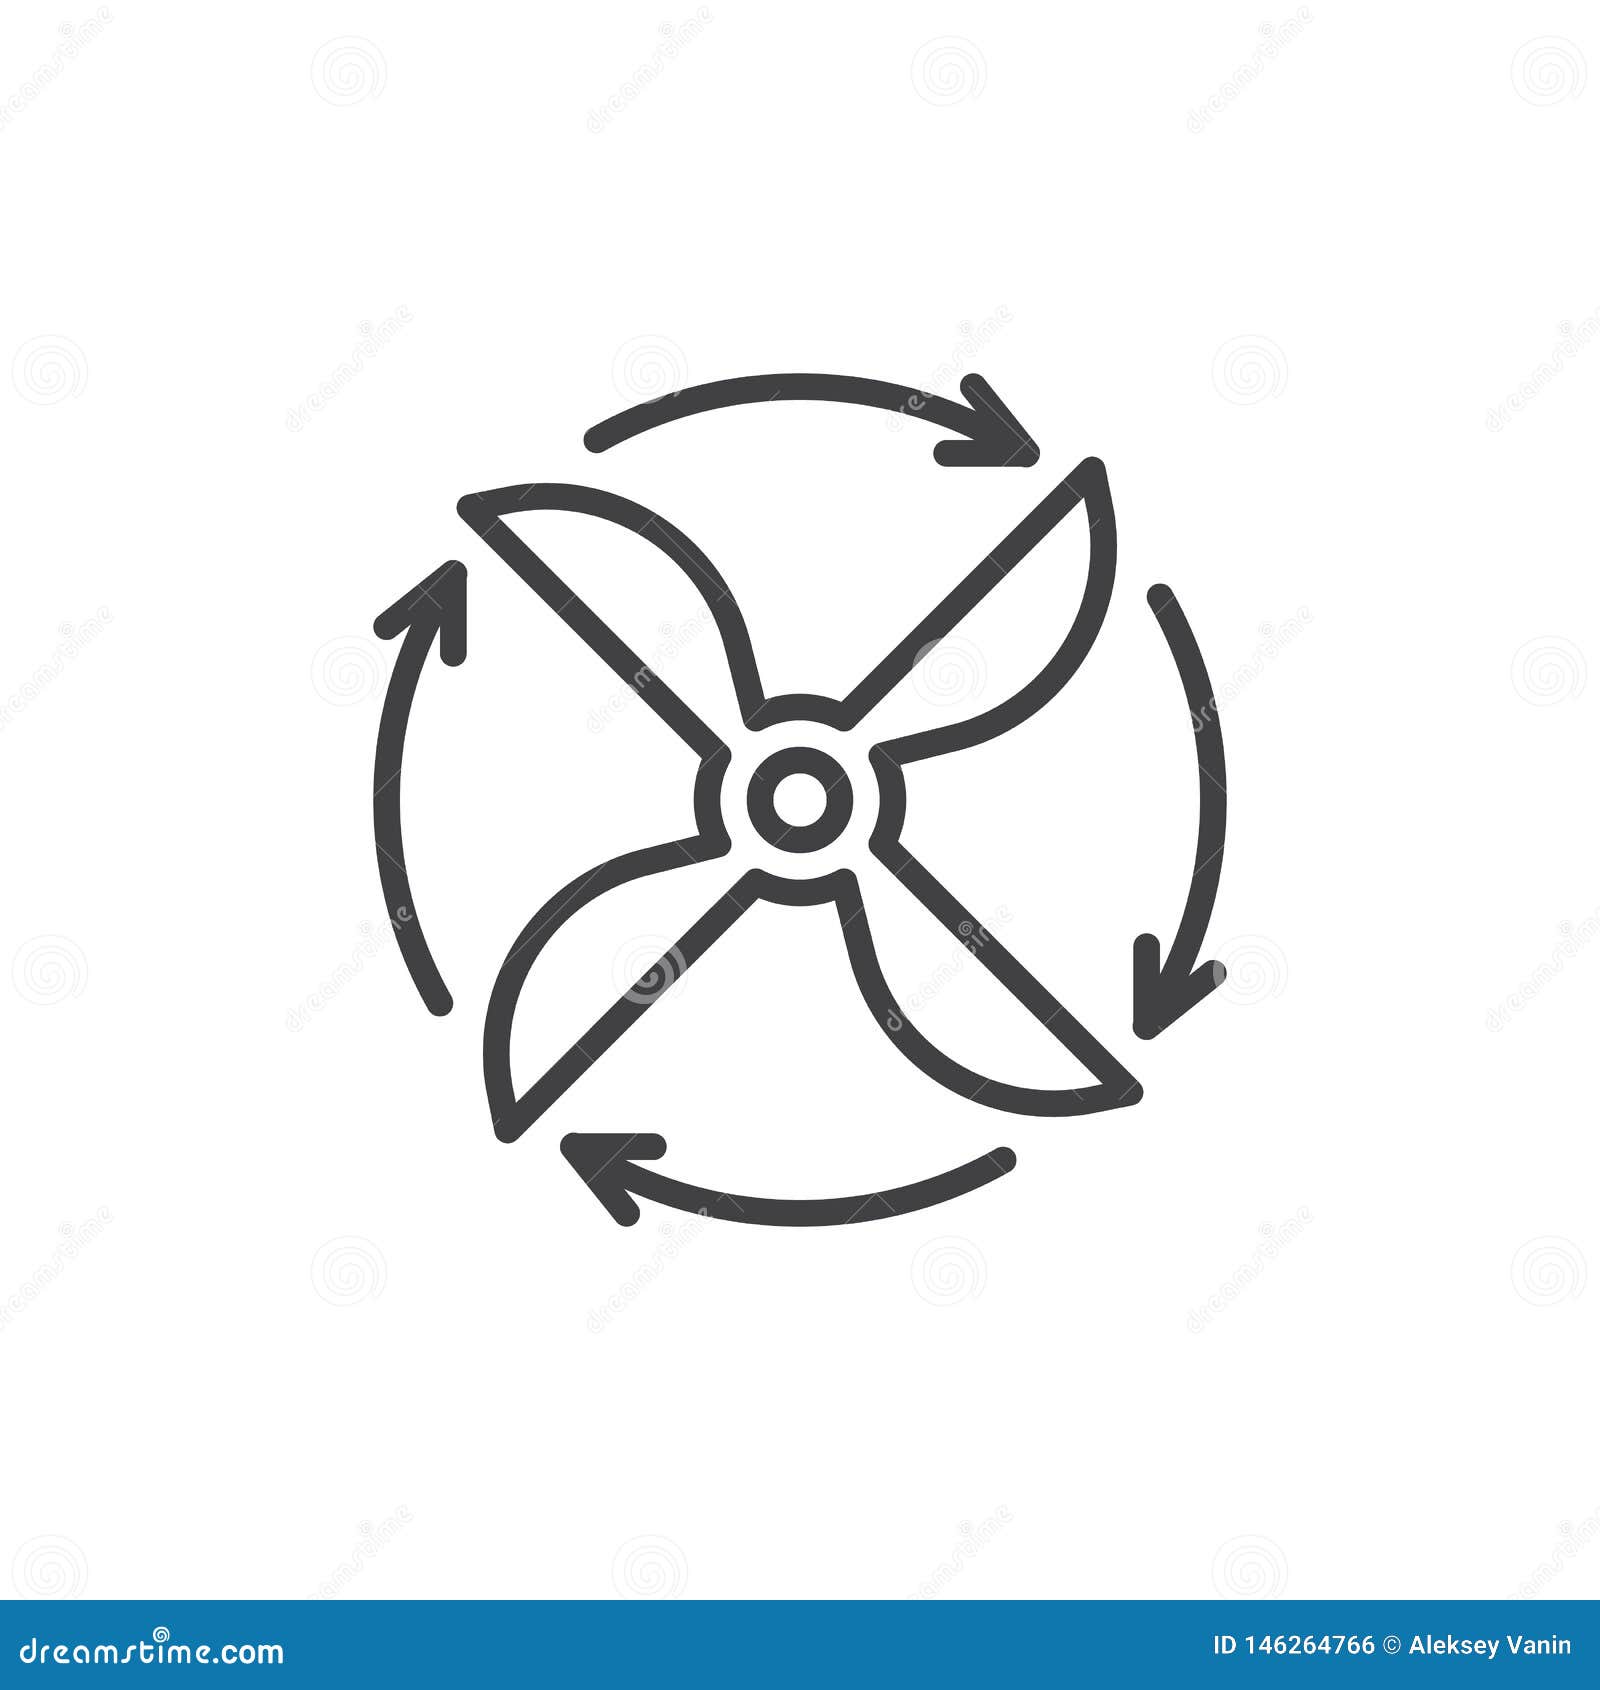 Ventilation line icon stock vector. Illustration of rotor - 146264766